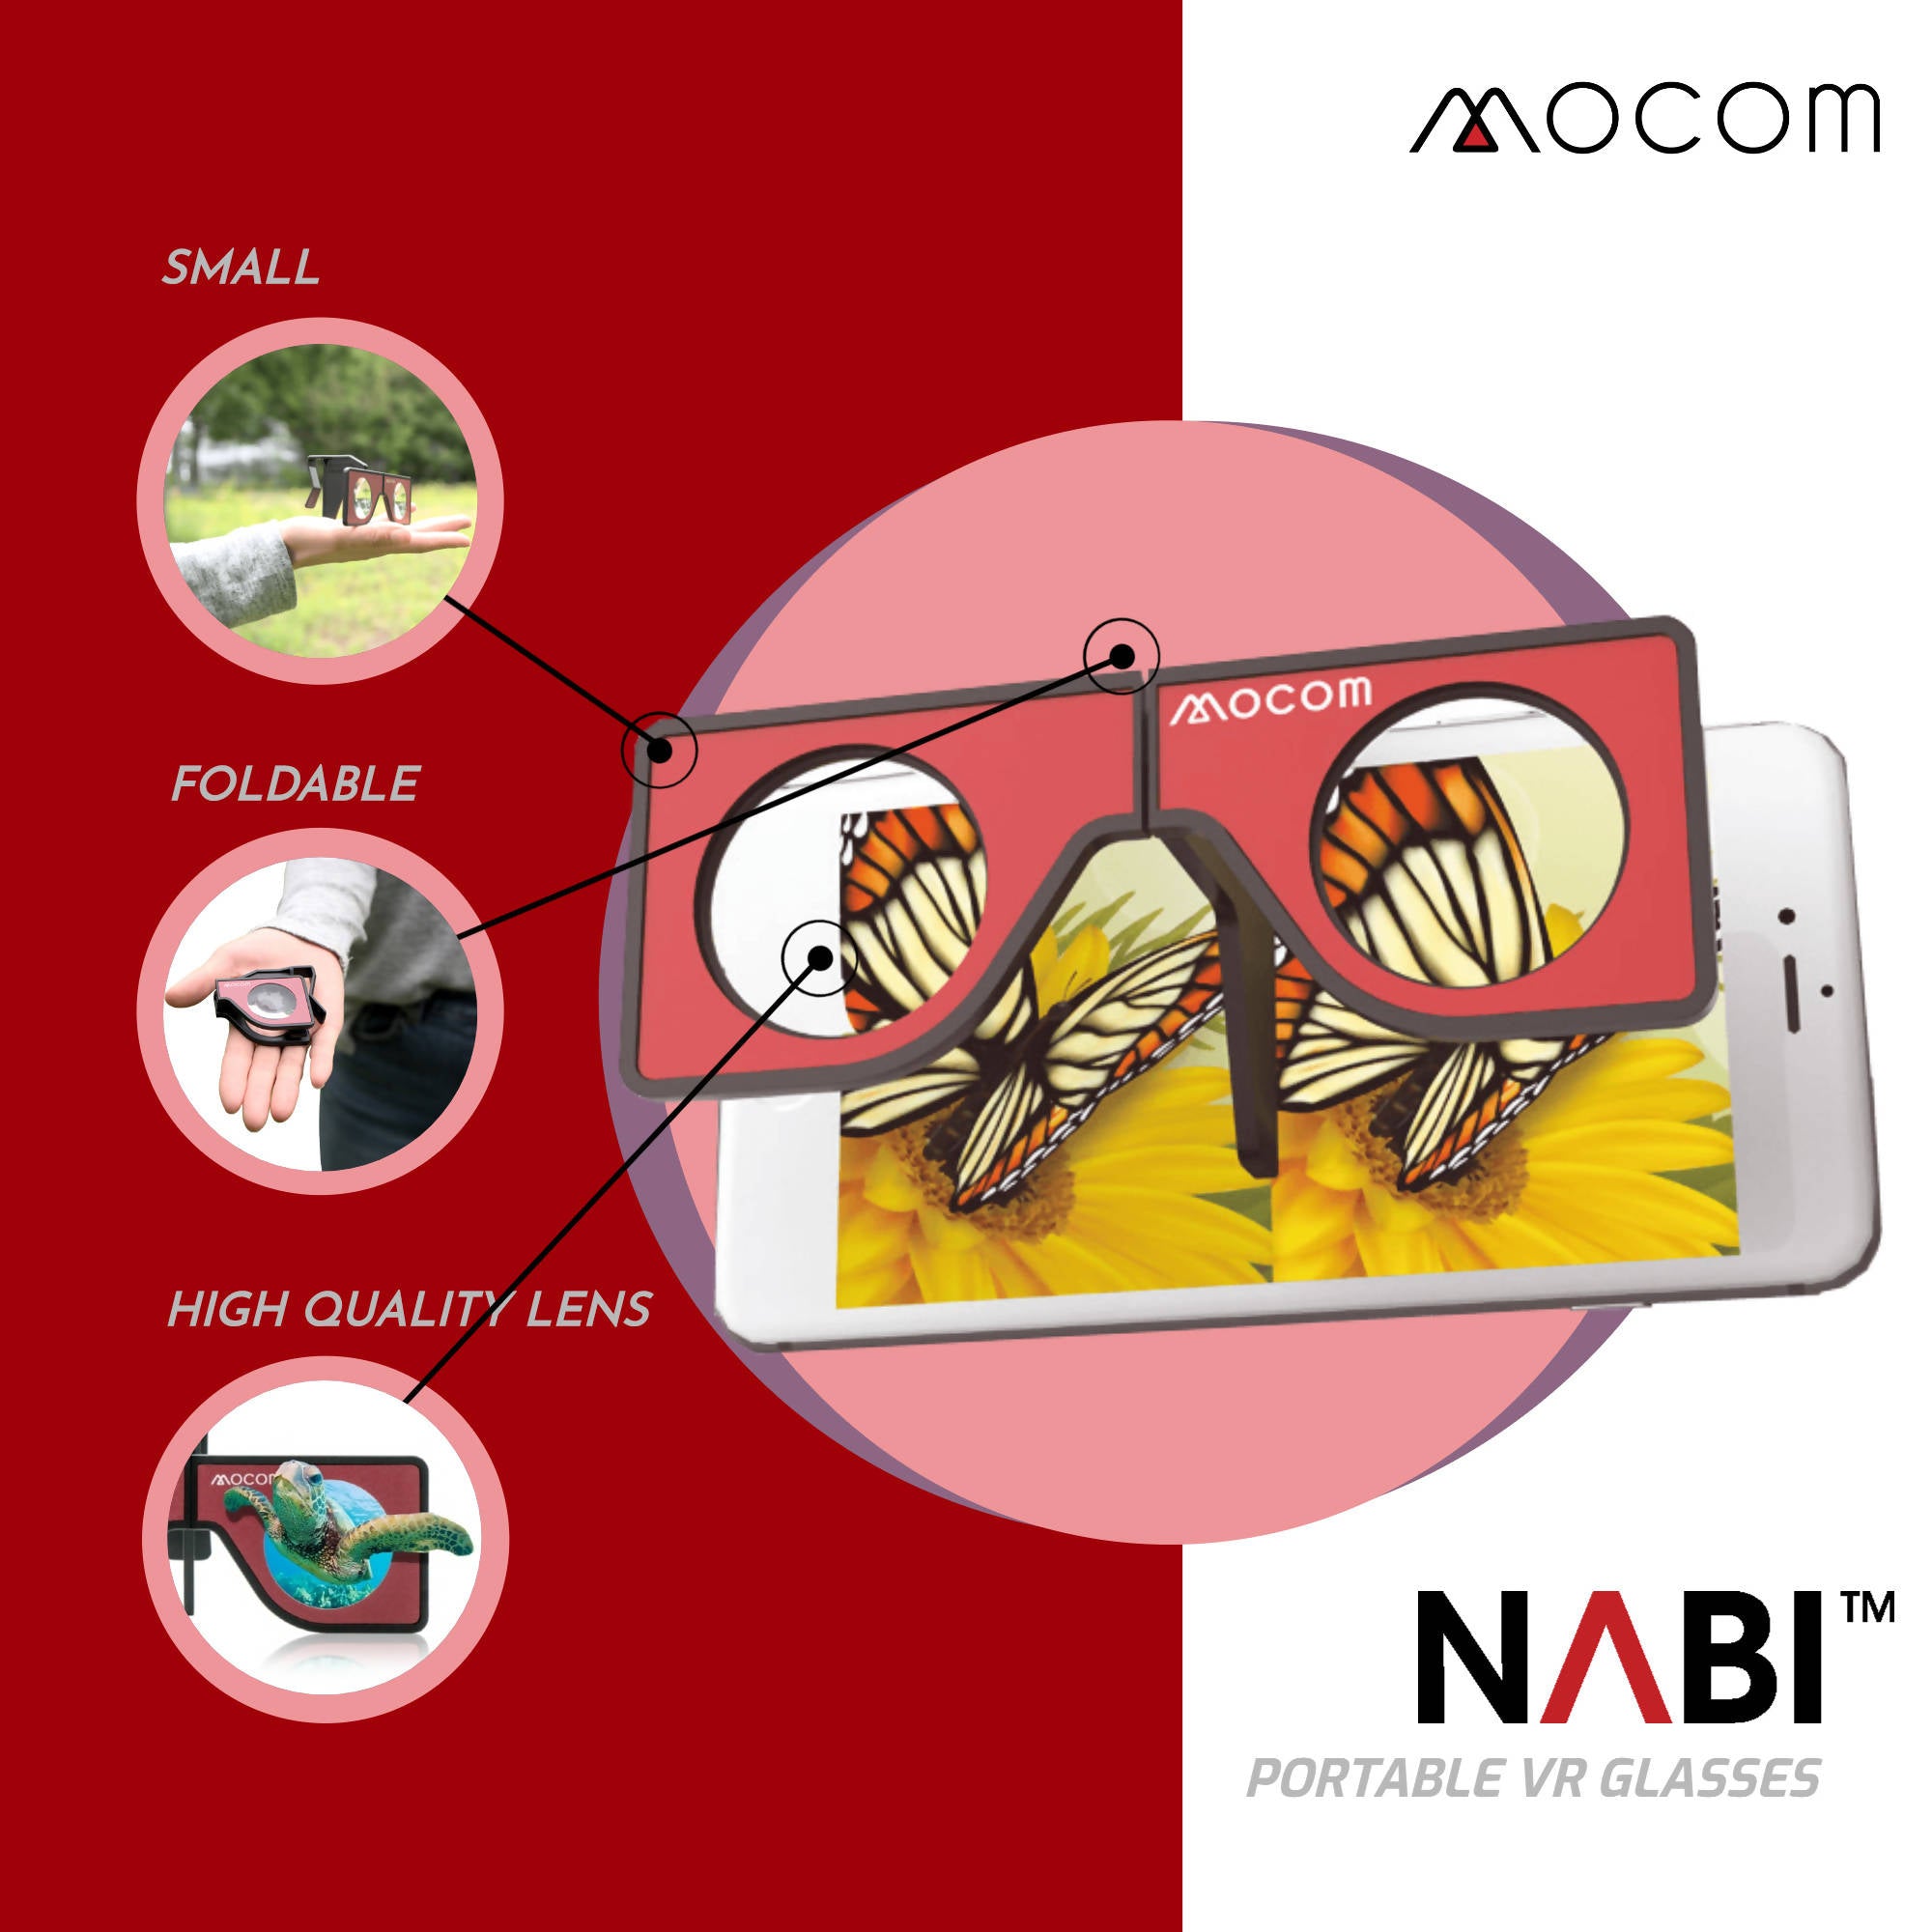 [Mocom] Kính VR xách tay "NABI" cho smartphone 